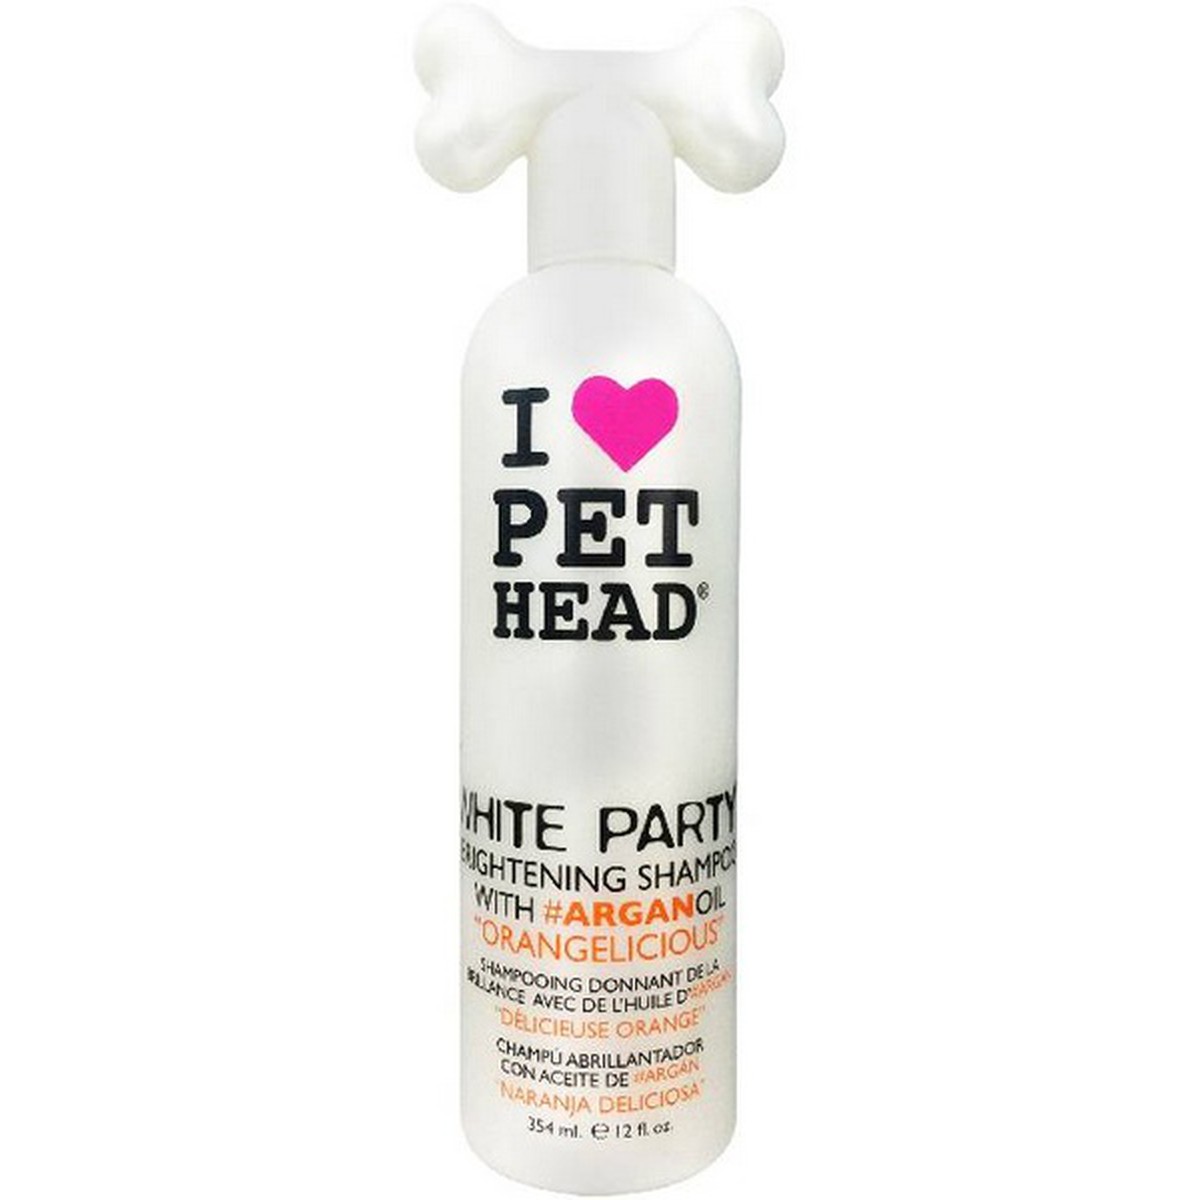   Pet Head WhiteParty shampoo 354 ml  354 ml